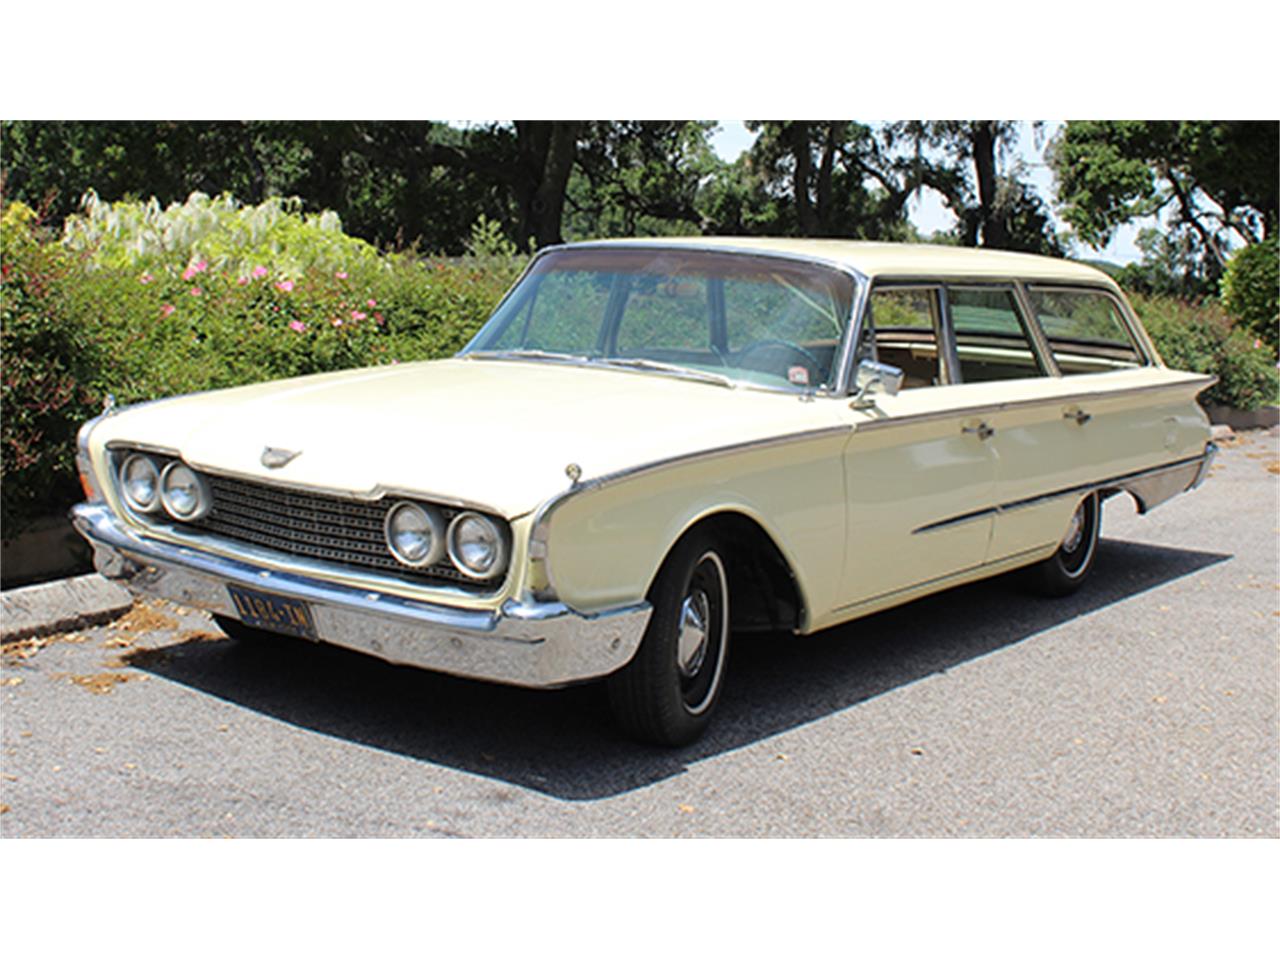 1960 Ford Ranch Wagon for sale located in Santa Monica, California - Auctio...